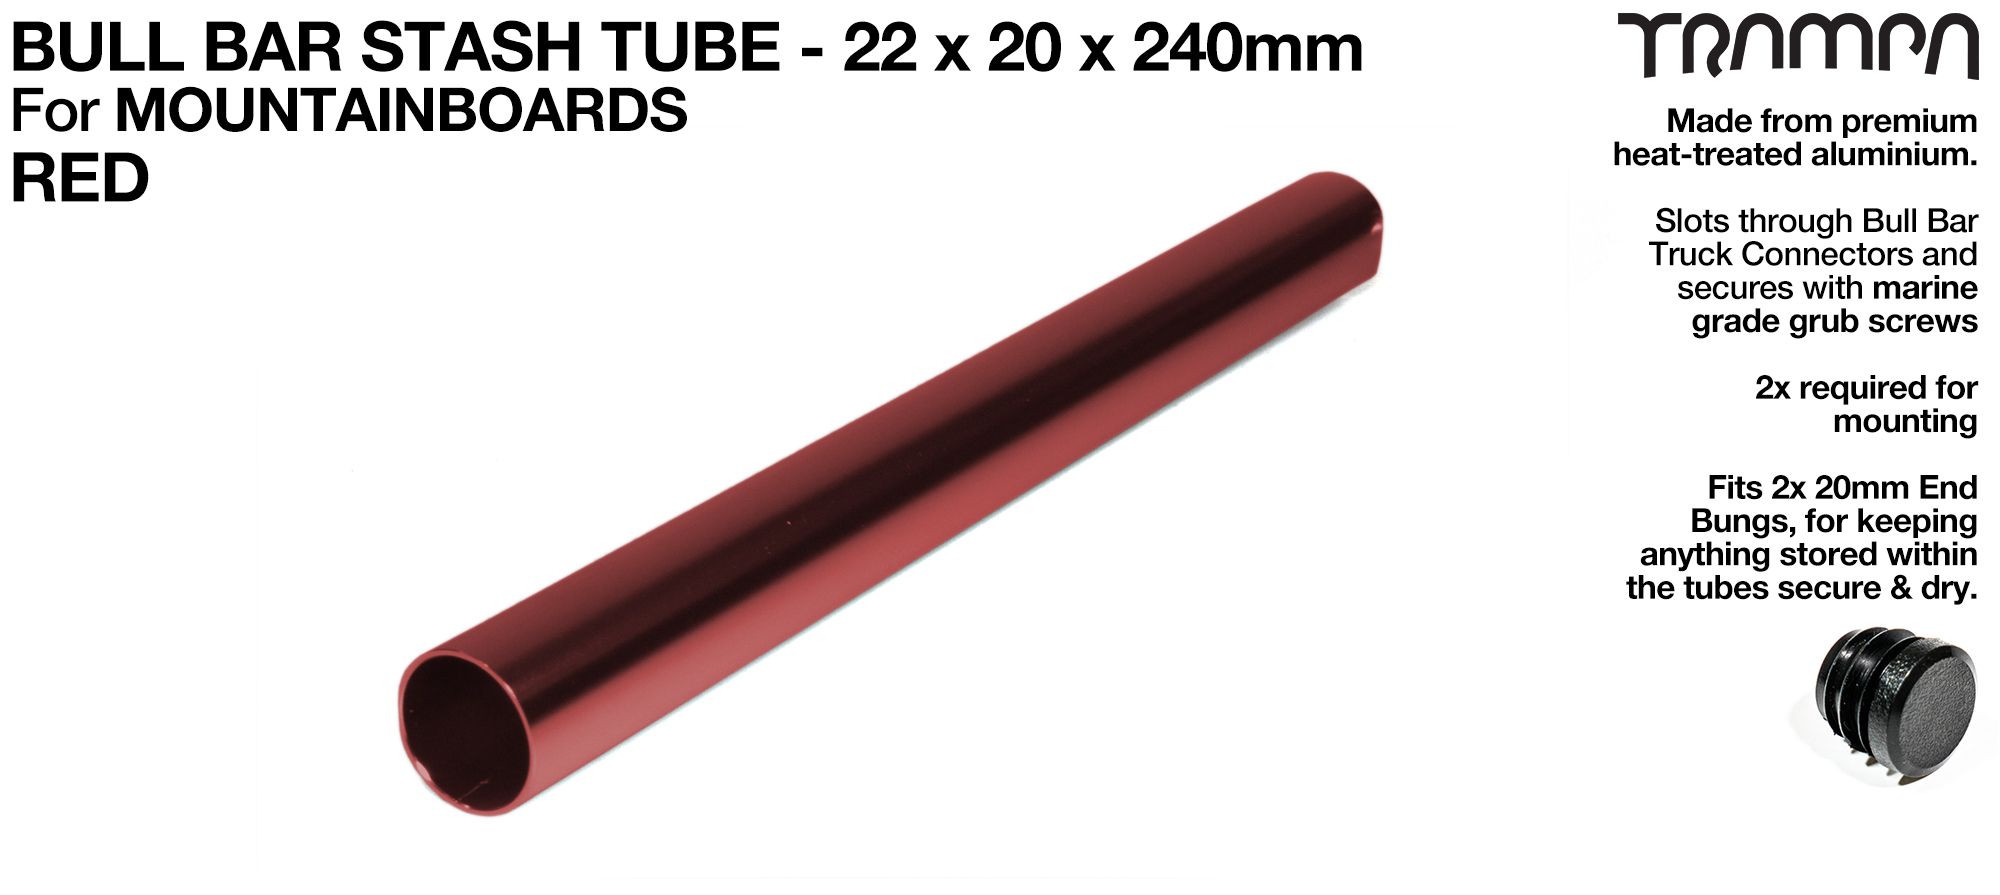 Mountainboard Bull Bar Hollow Aluminium Stash Tube - RED 22x20x240mm 